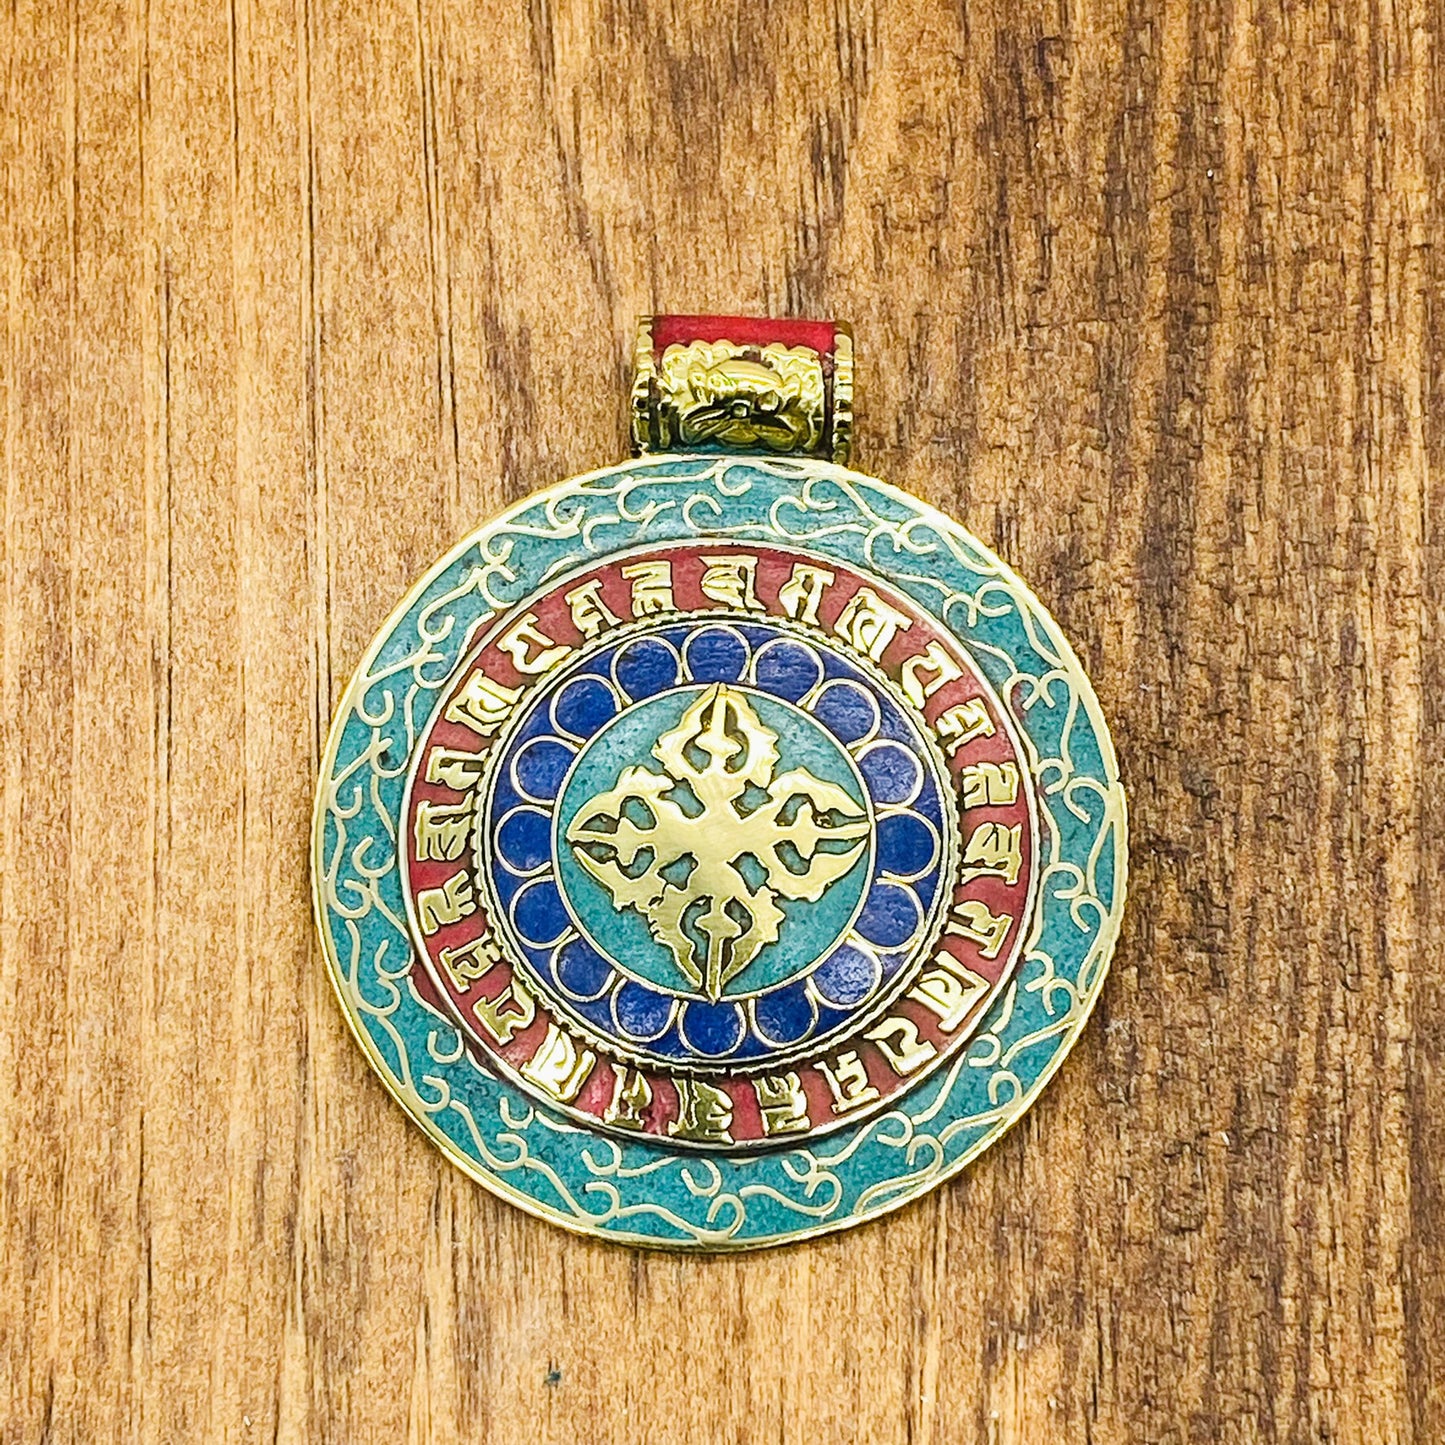 Round Dorje/Vajra Pendant, Dorje Necklace, Thunderbolt Jewelry, Ethnic Dorje Pendant, Buddhist Amulet for Protection, Antique Vajra